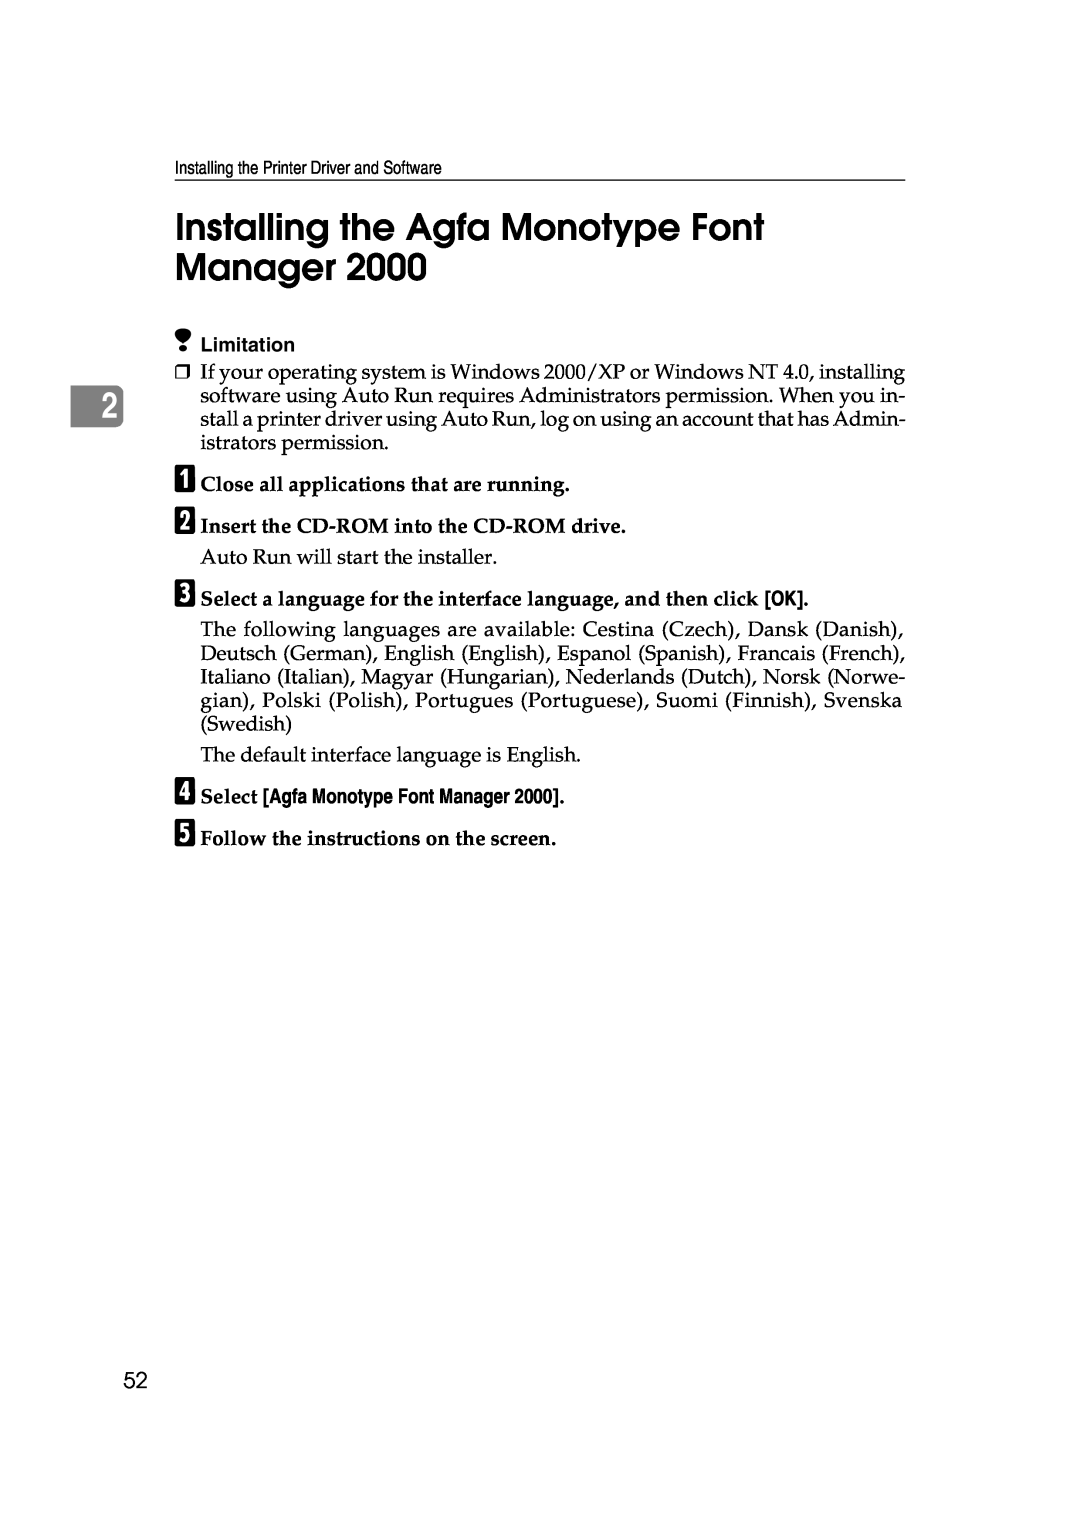 Xerox 1075 manual Installing the Agfa Monotype Font Manager, D Select Agfa Monotype Font Manager, Limitation 